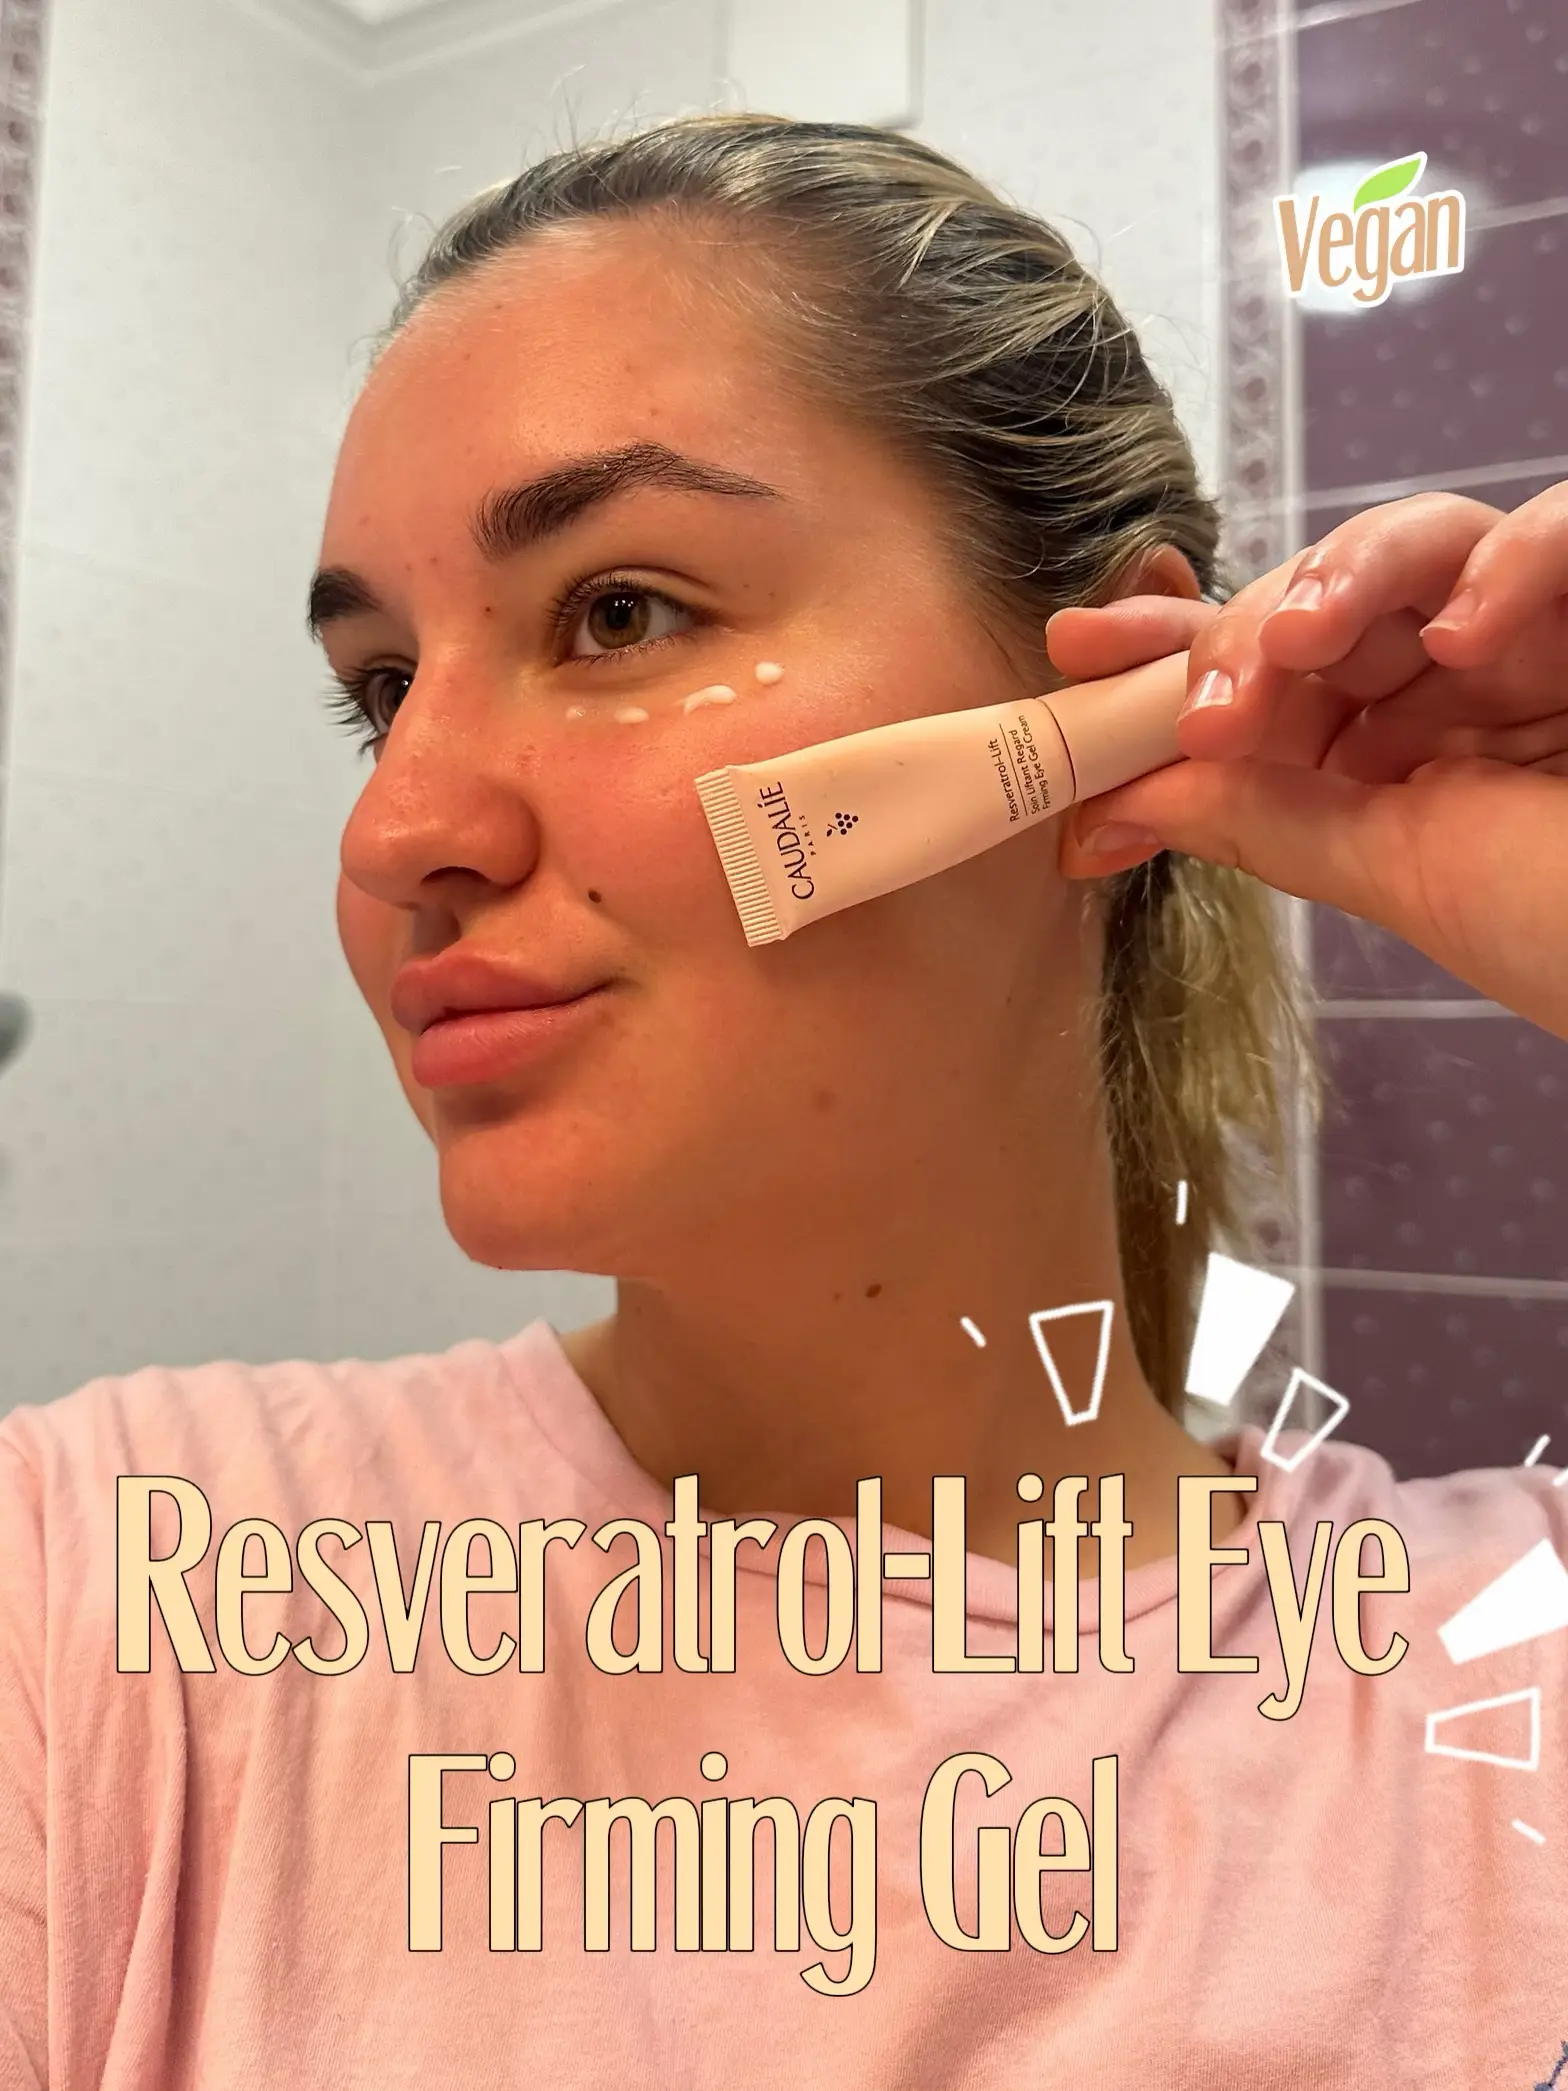 Caudalie Resveratrol-Eye cream